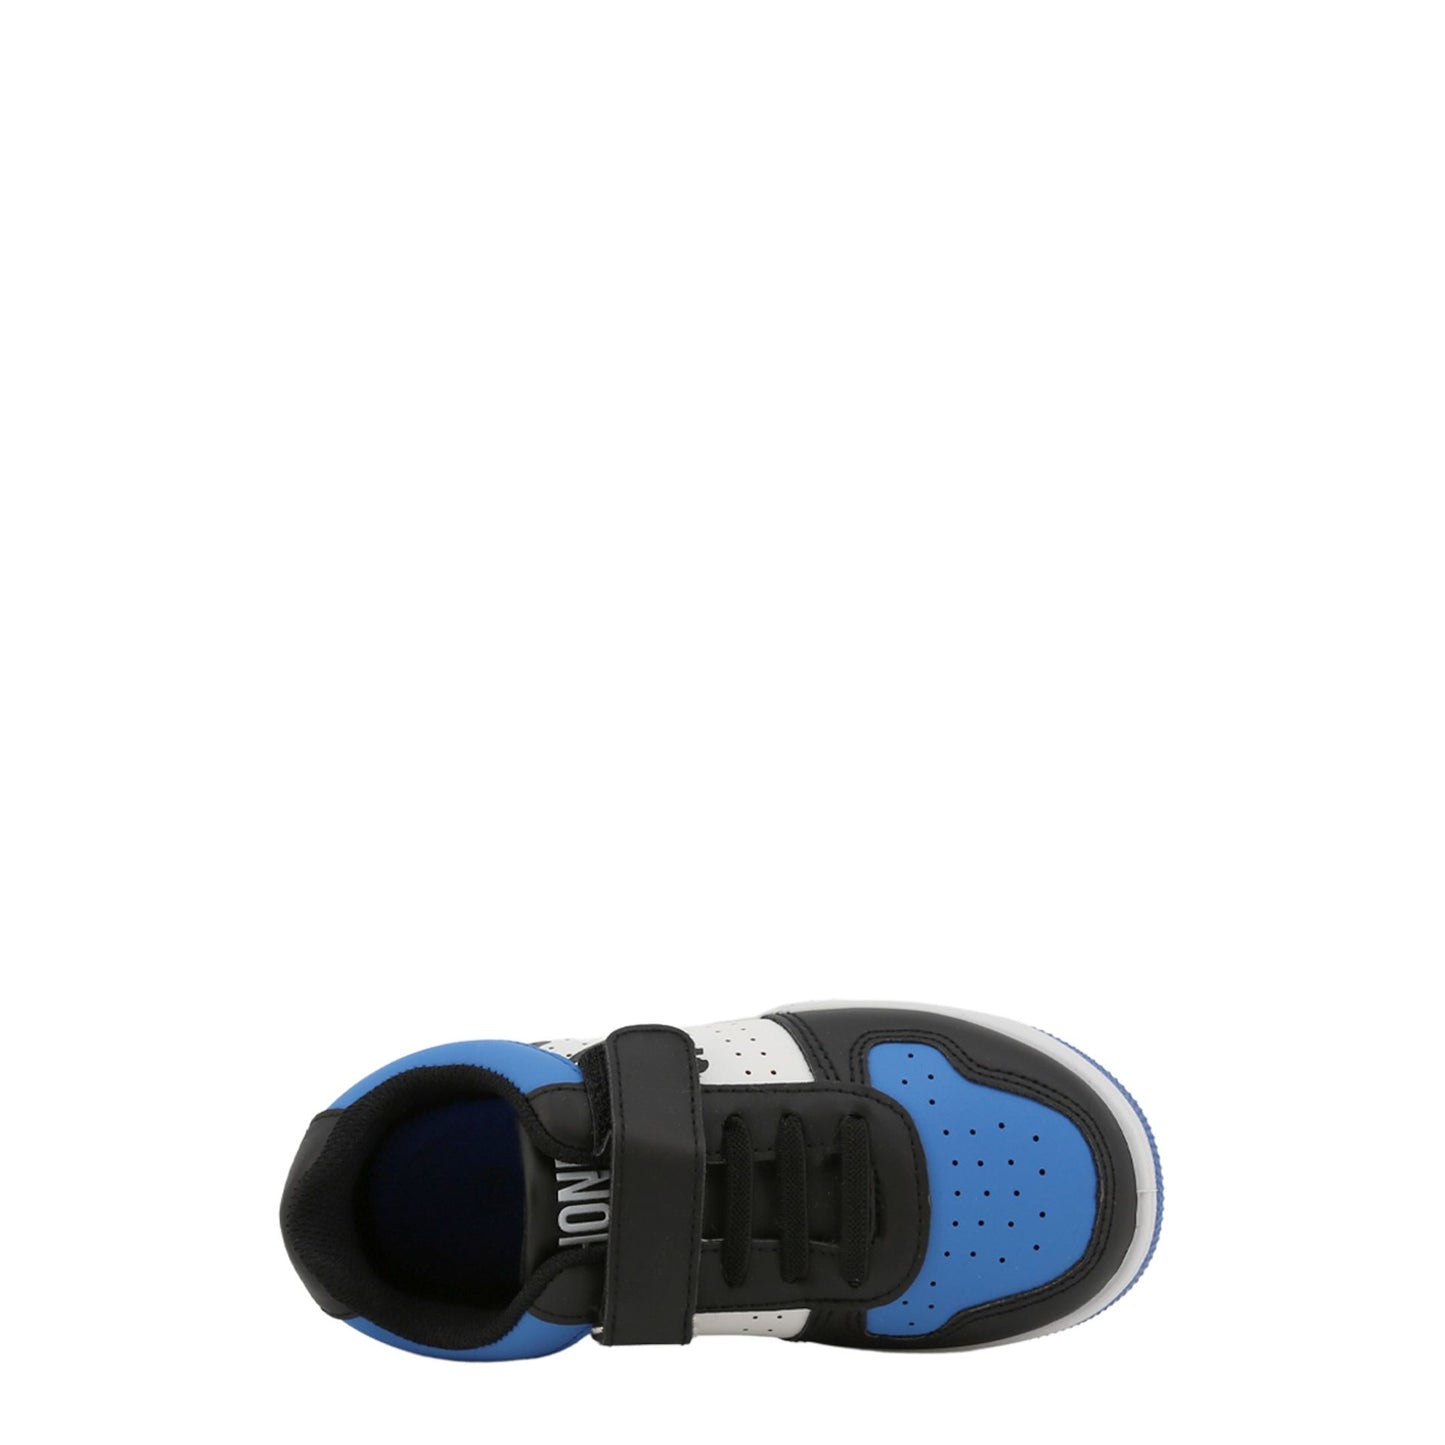 Sneakers con velcro nera e blu, morbida e comoda